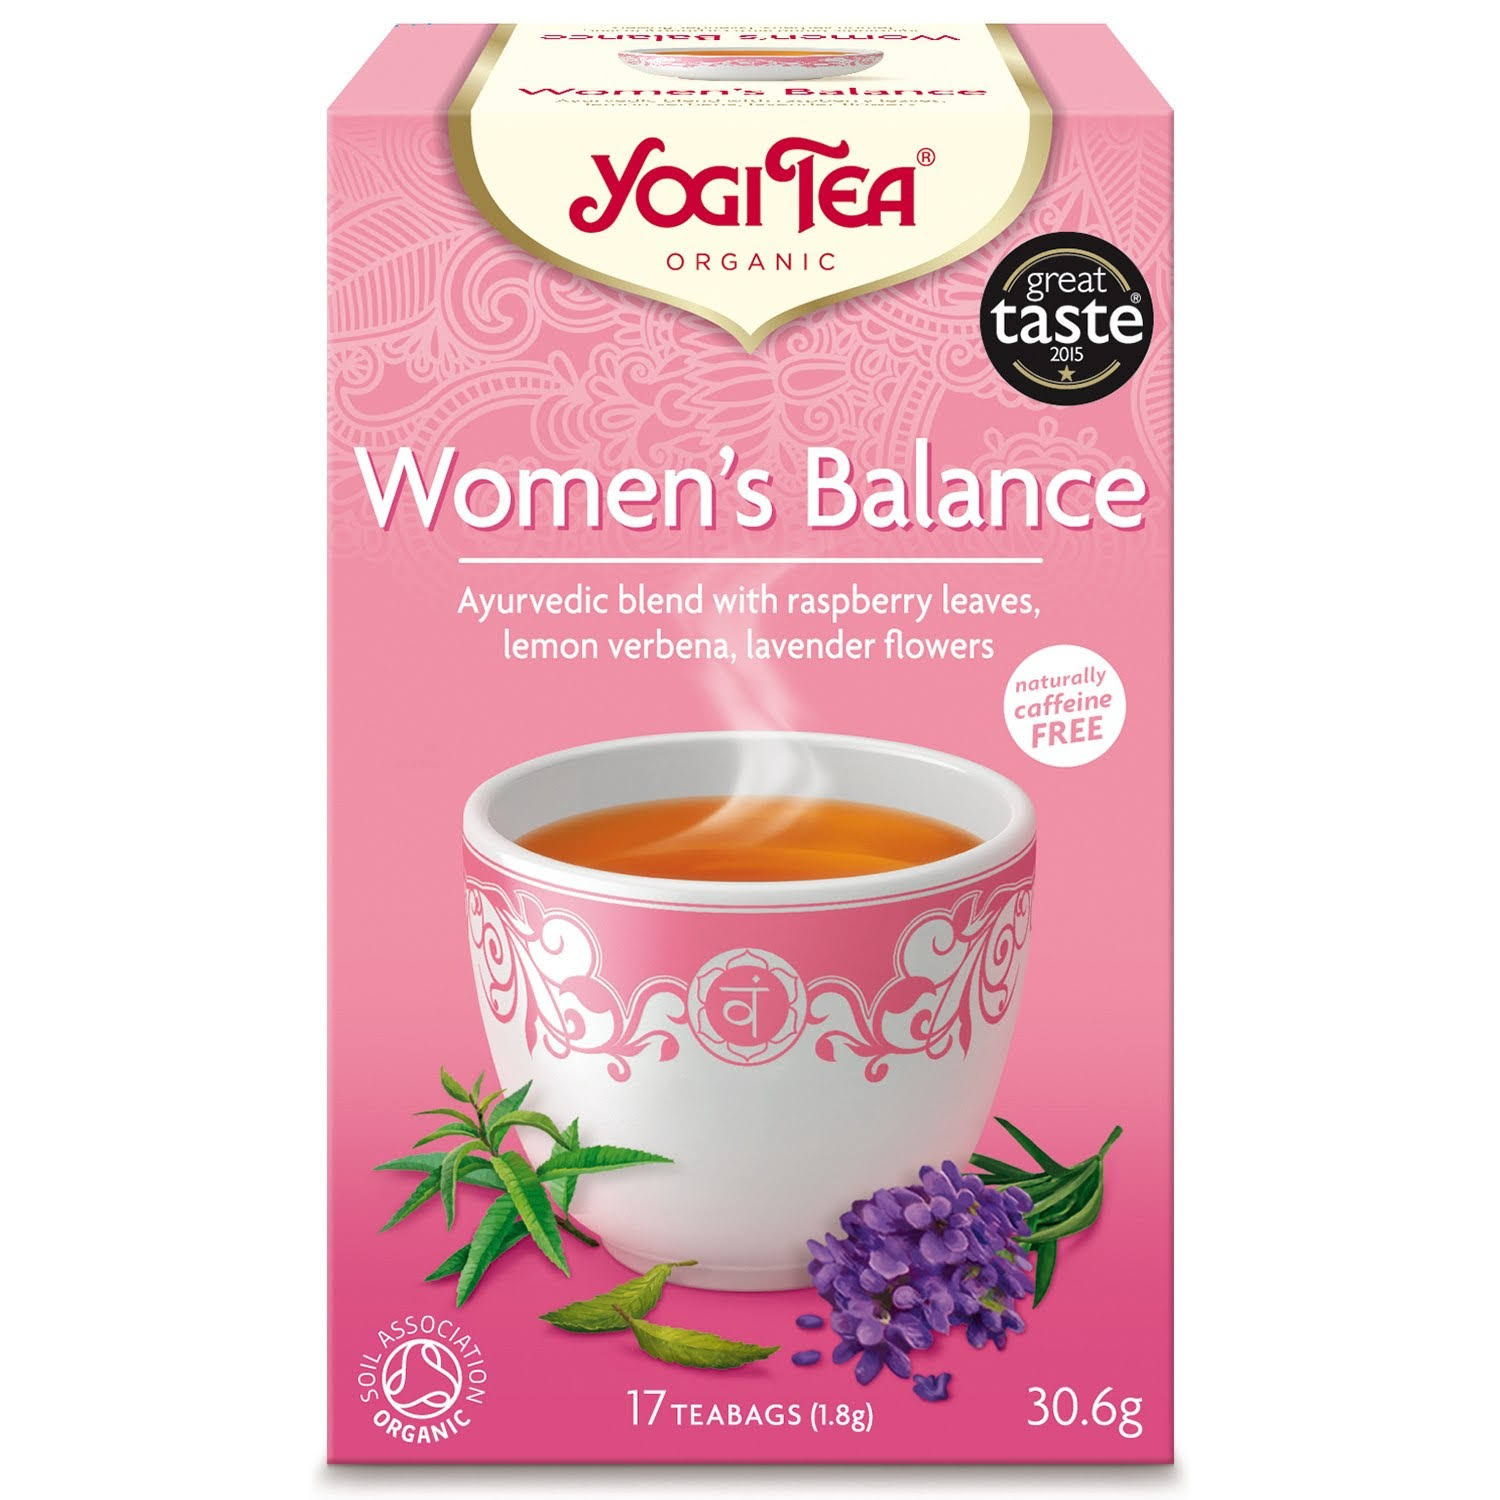 Yogi Tea Women's Balance Herb and Spice Infusion Tea Bags Pack - 17pk, 30.6g